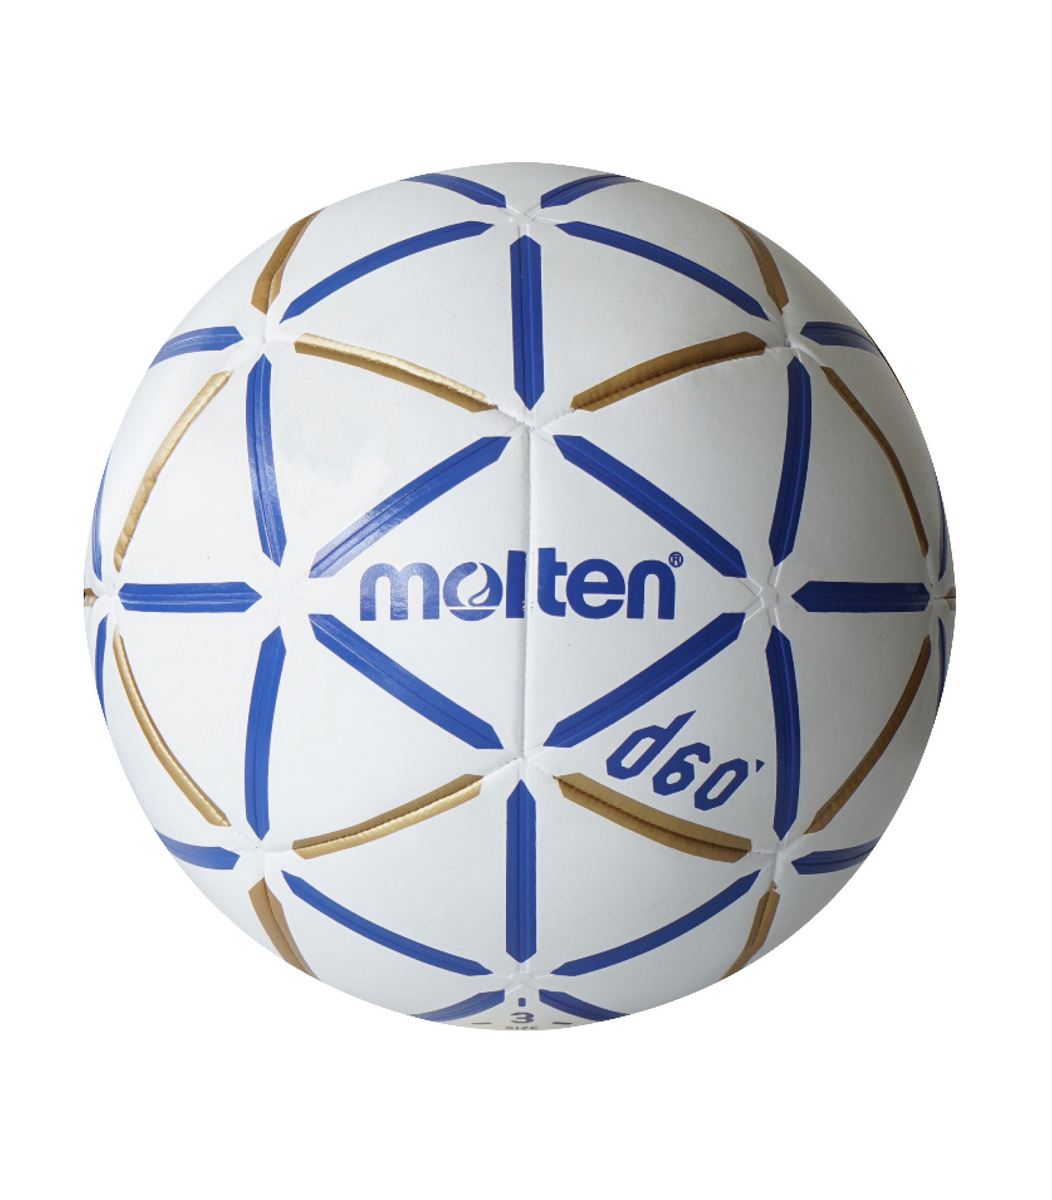 Ballon de hand Molten D60 SANS RESINE T2